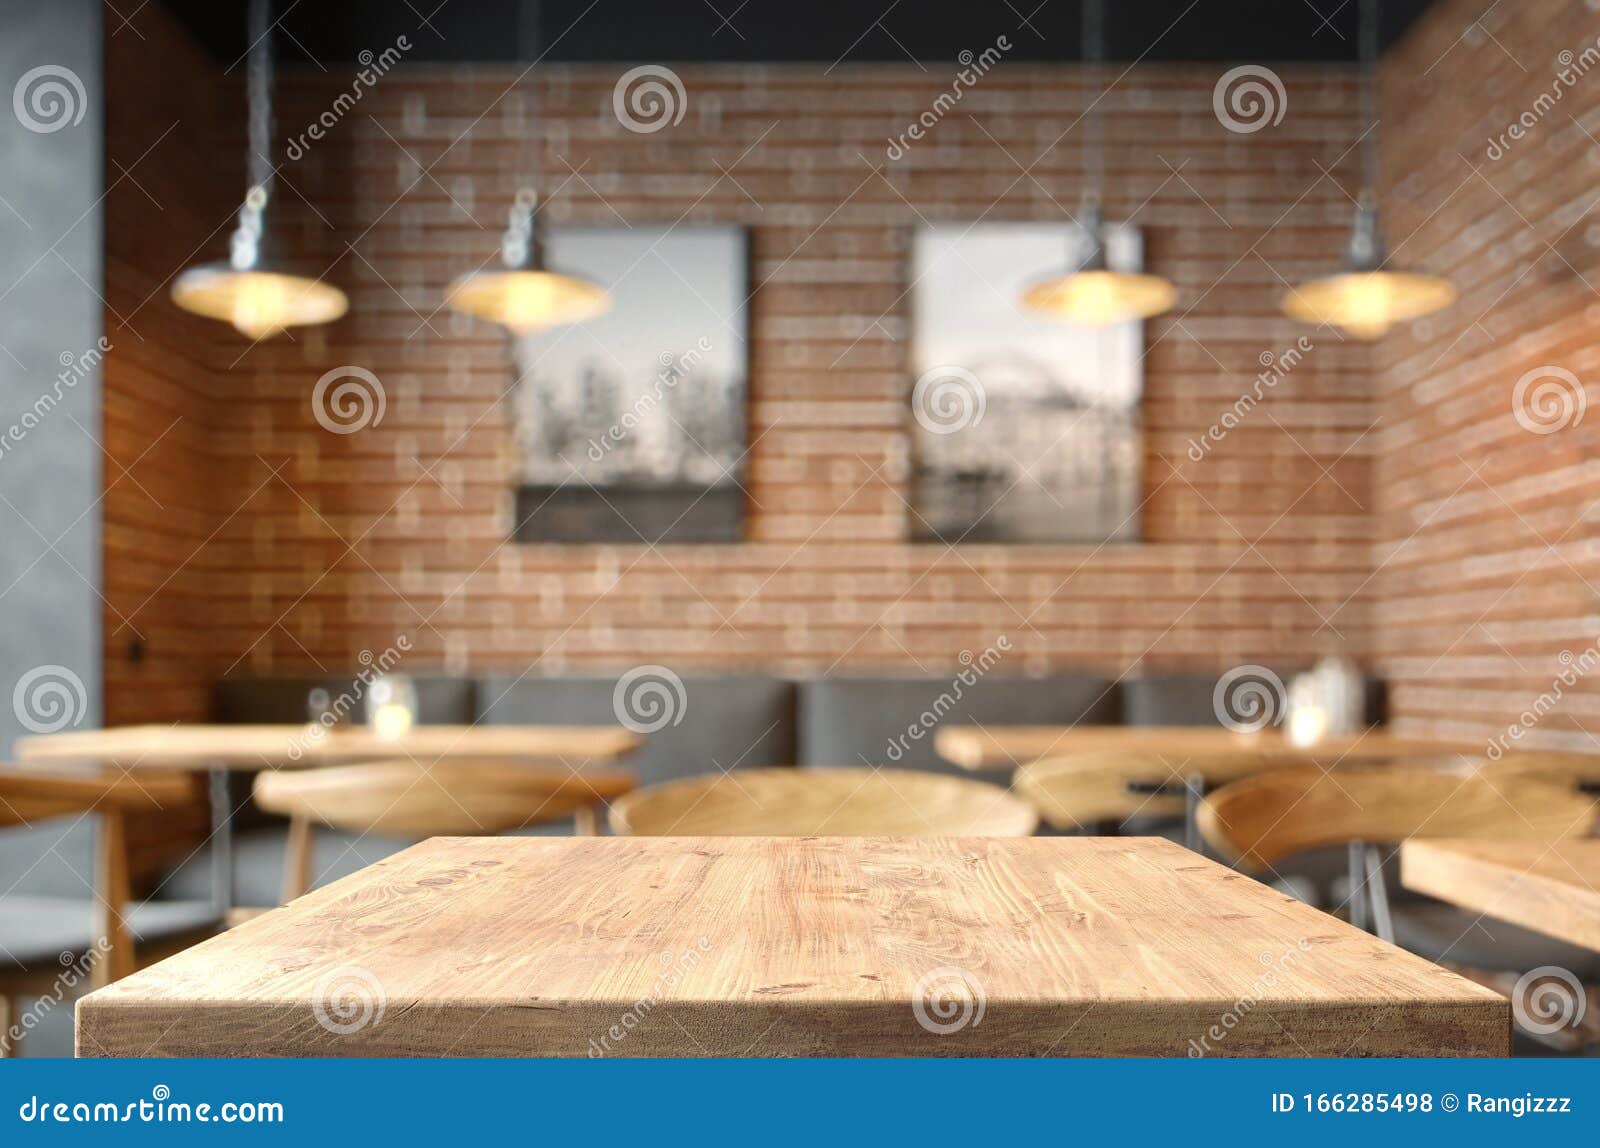 empty coffee table over defocused coffee shop